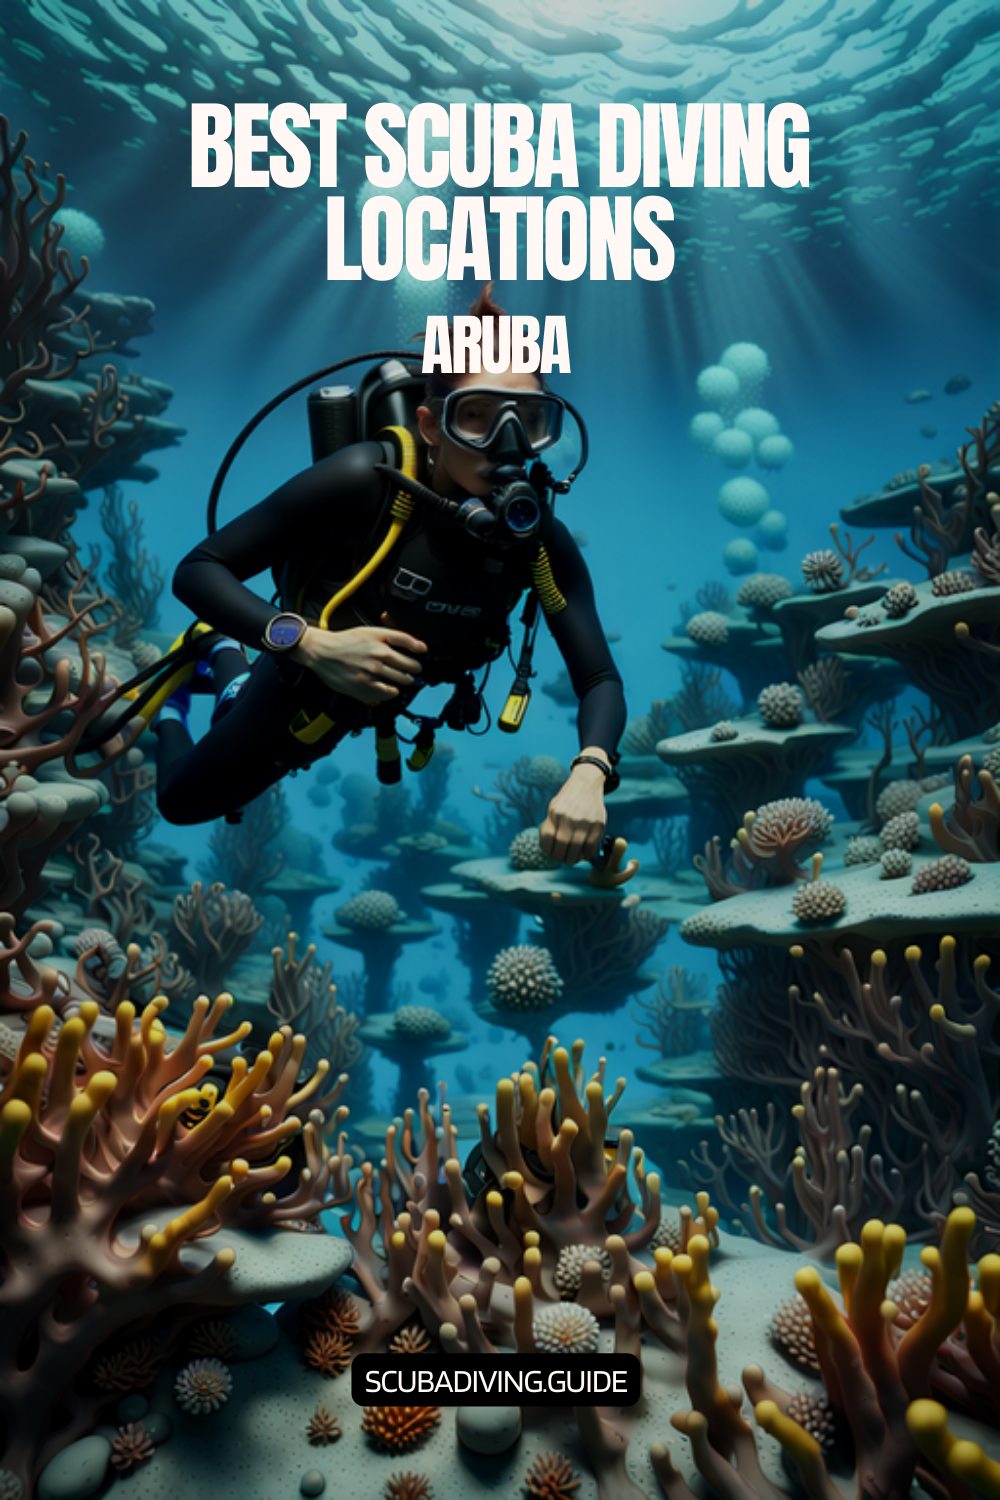 Scuba Diving Locations in Aruba